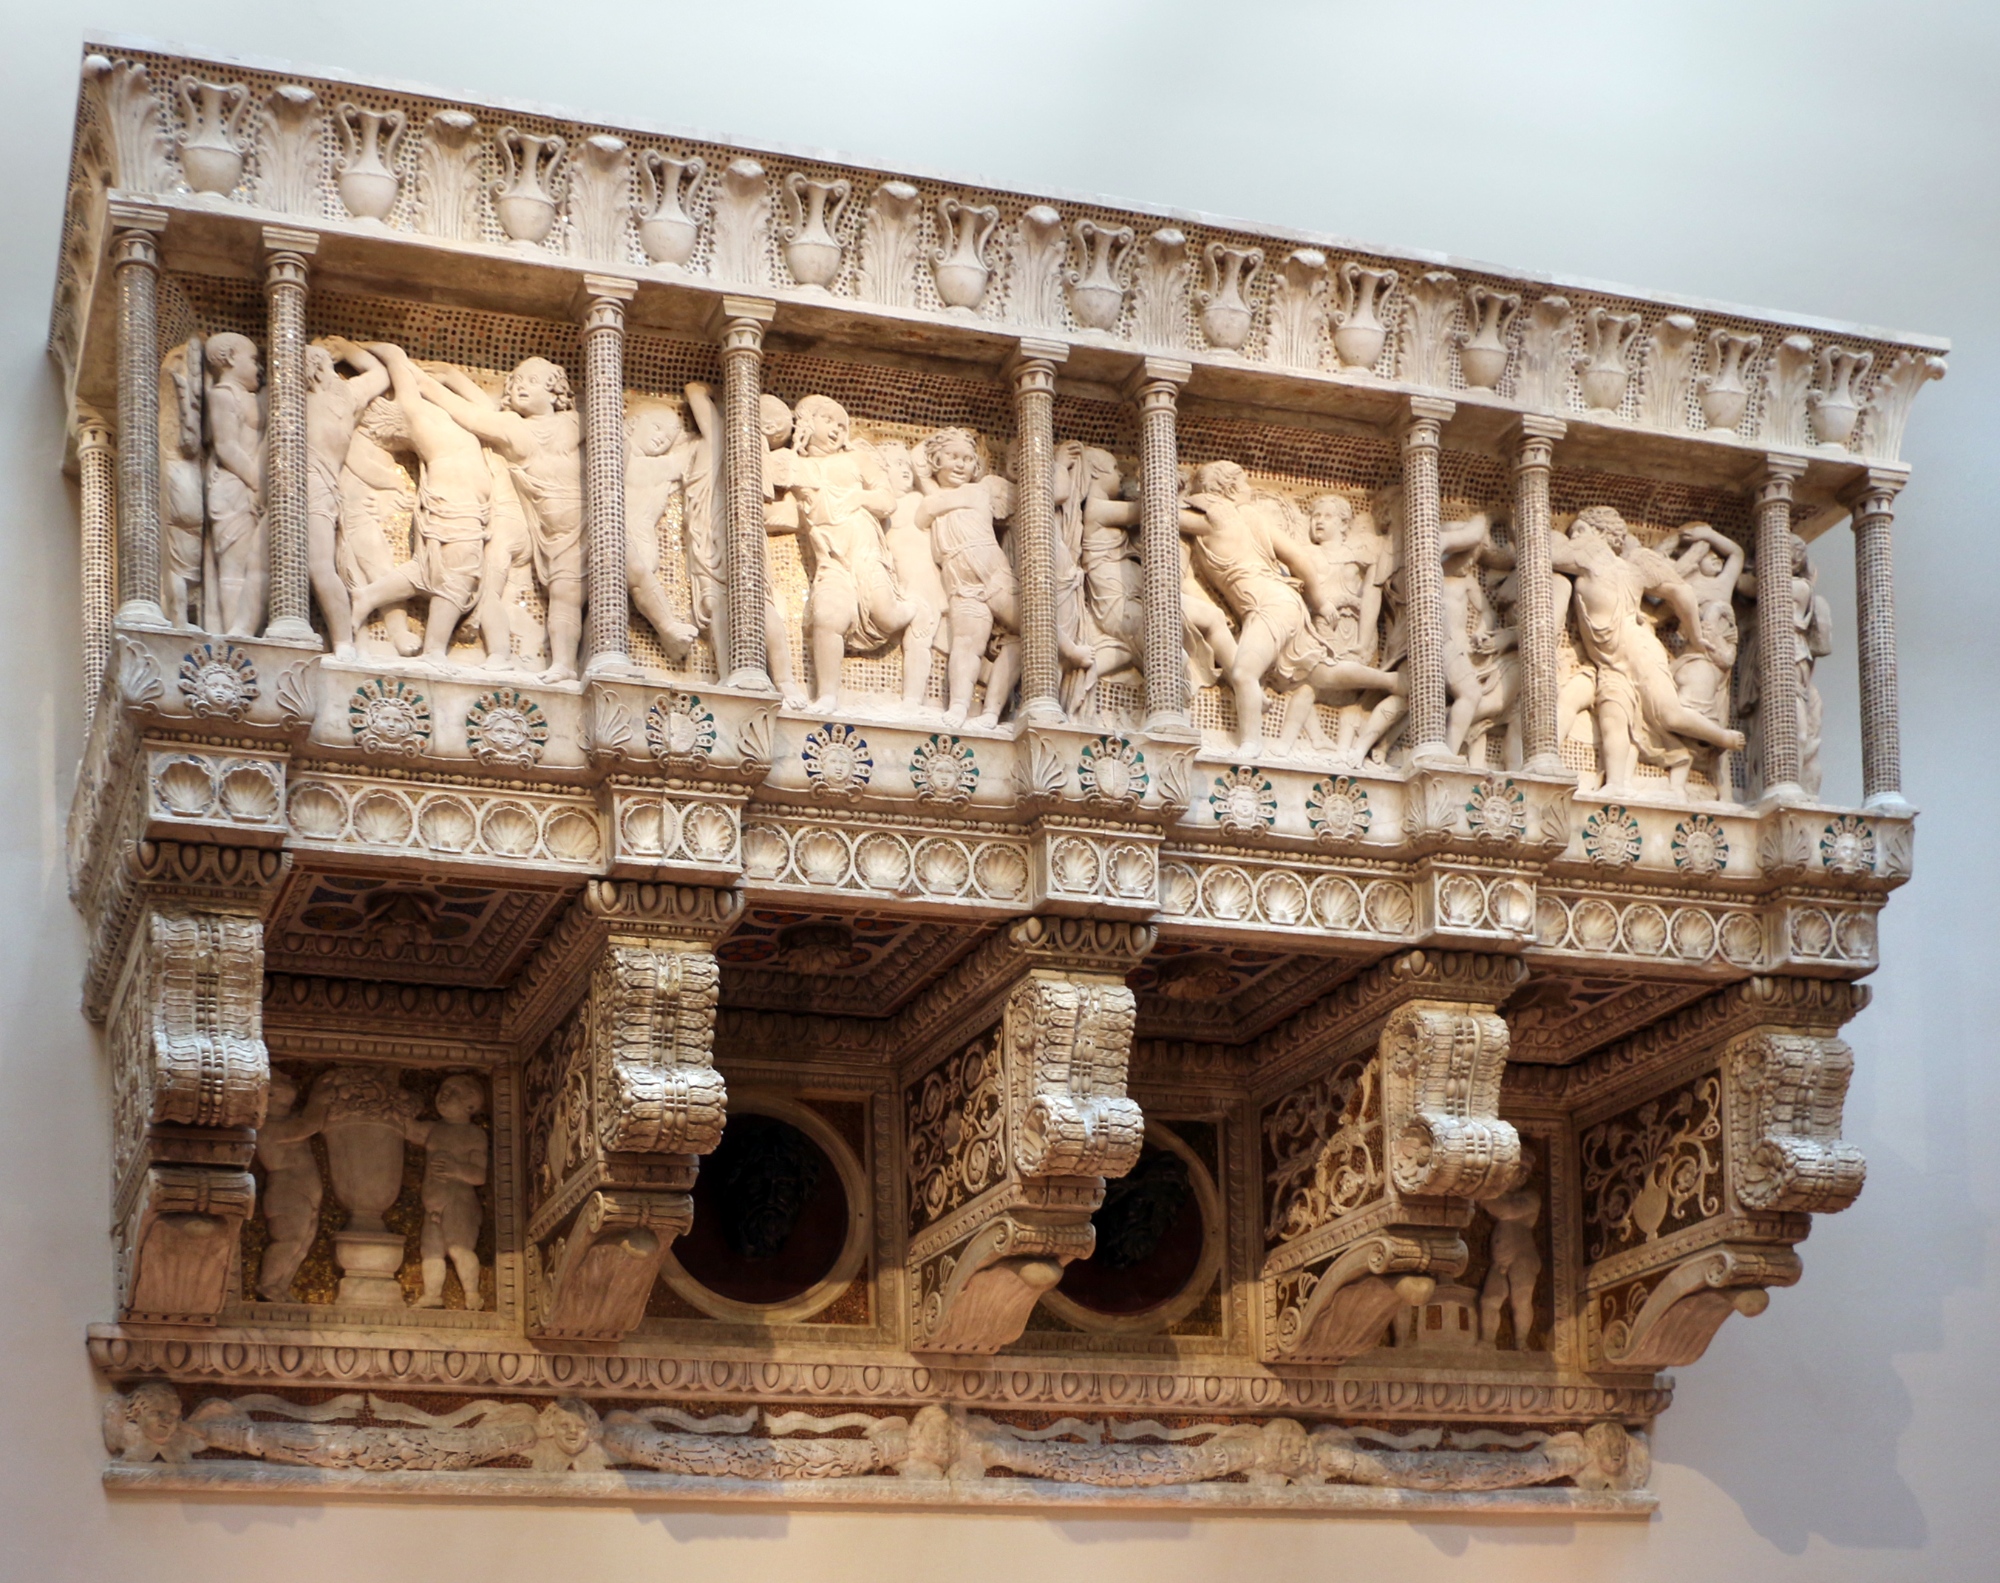 Cantoria by Donatello in the Opera del Duomo Museum, Florence